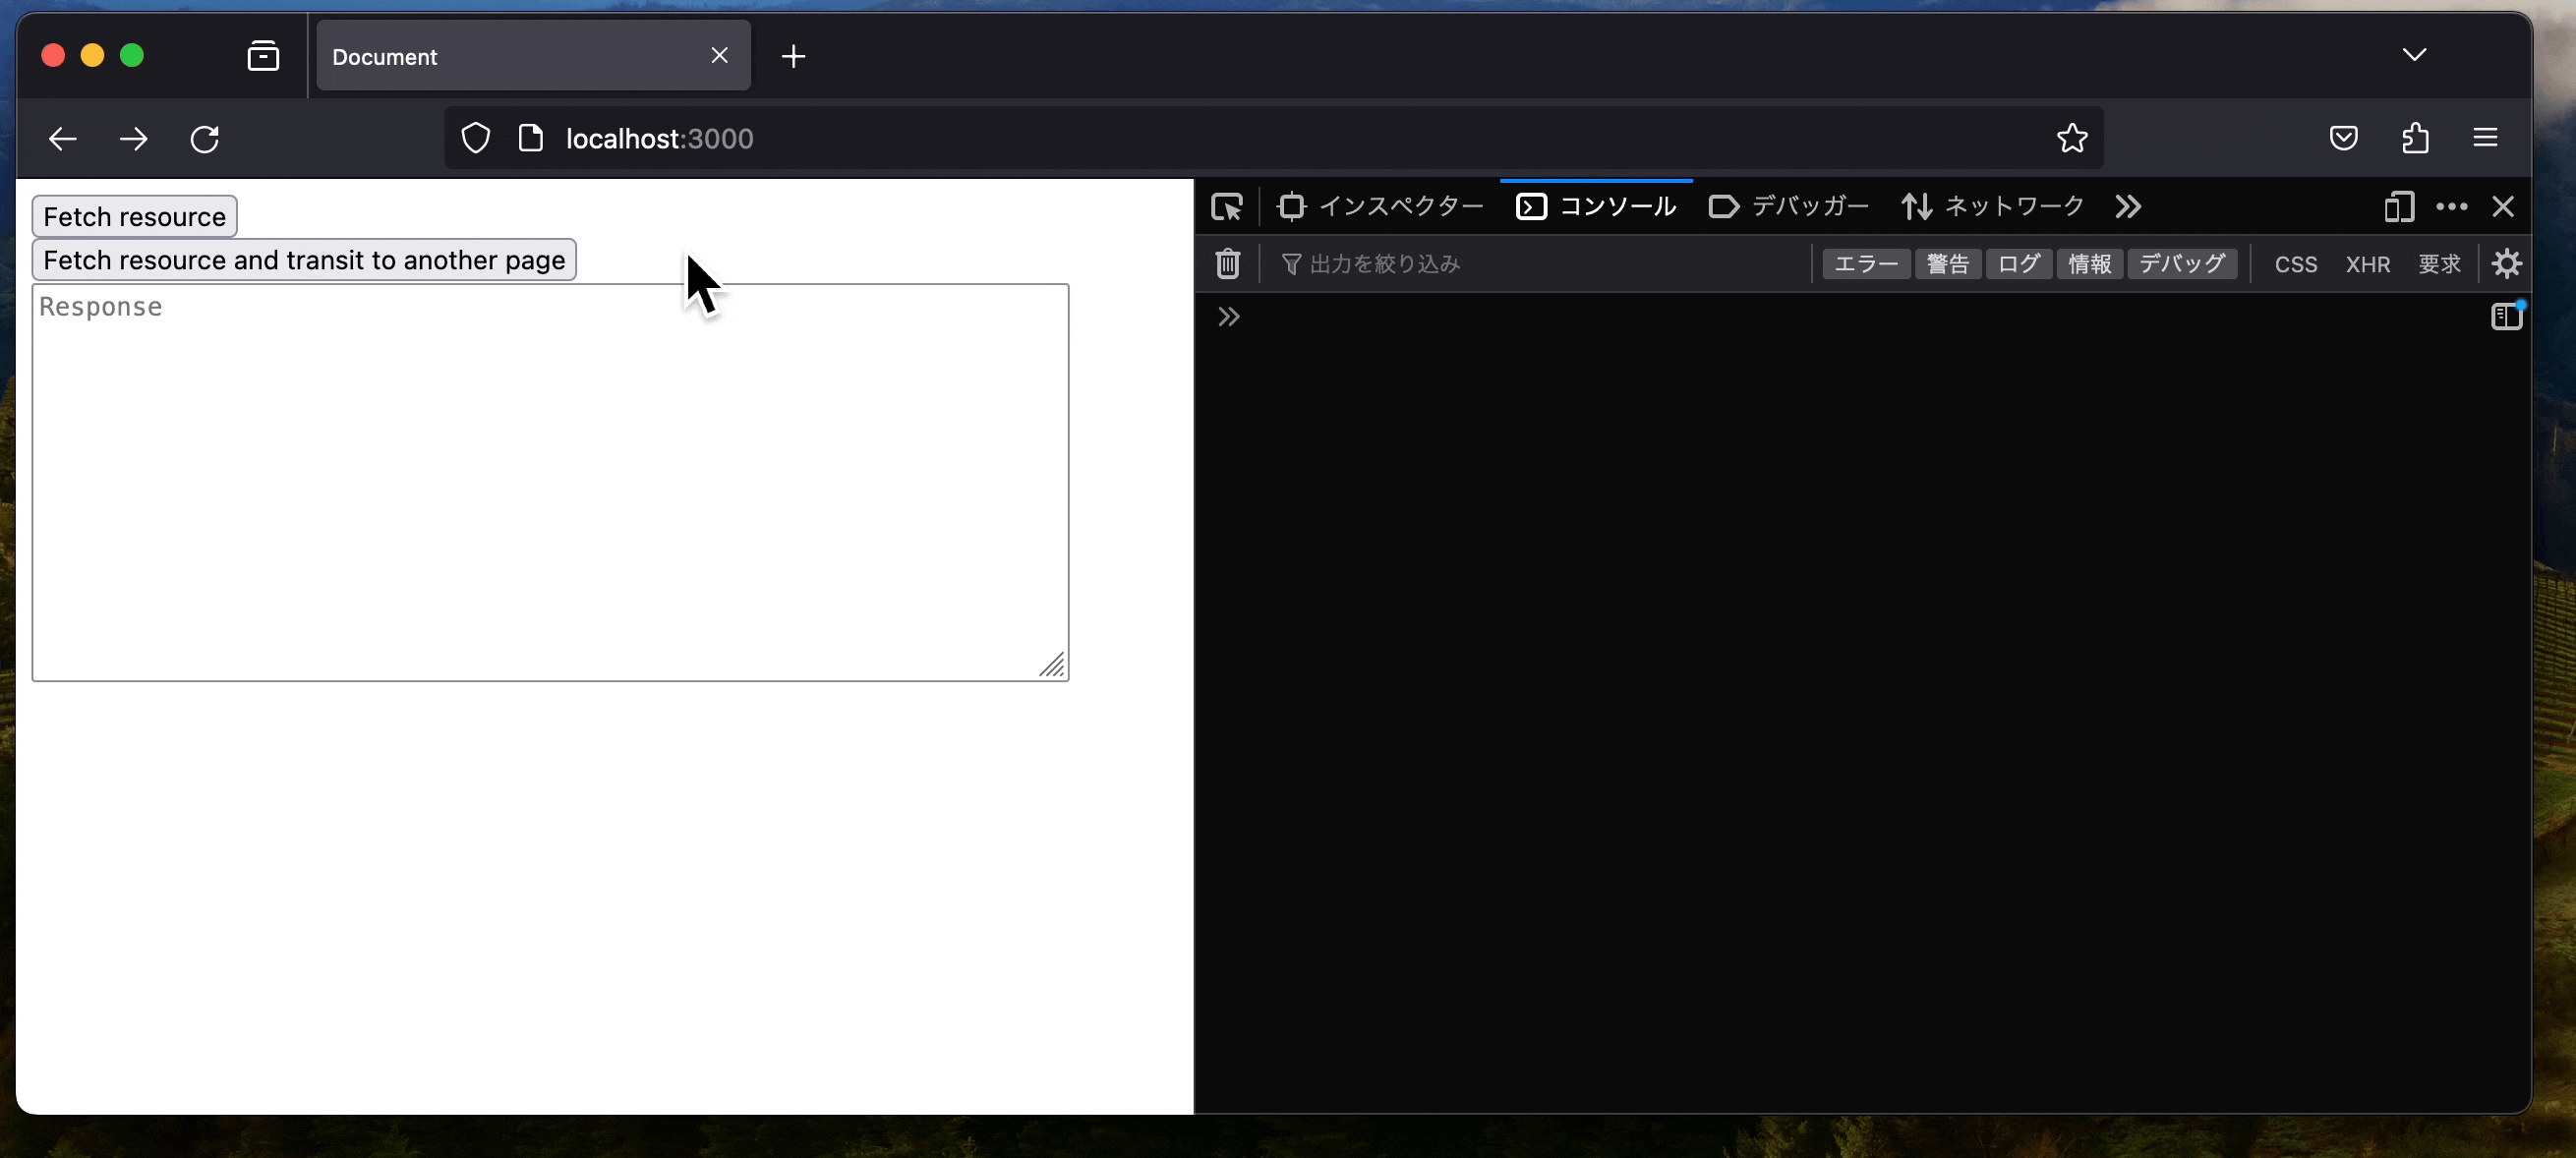 Firefox を用いて fetch 中にページ遷移した際の挙動をキャプチャした映像。ページ遷移した後ブラウザバックすると、エラーが画面に表示されている。